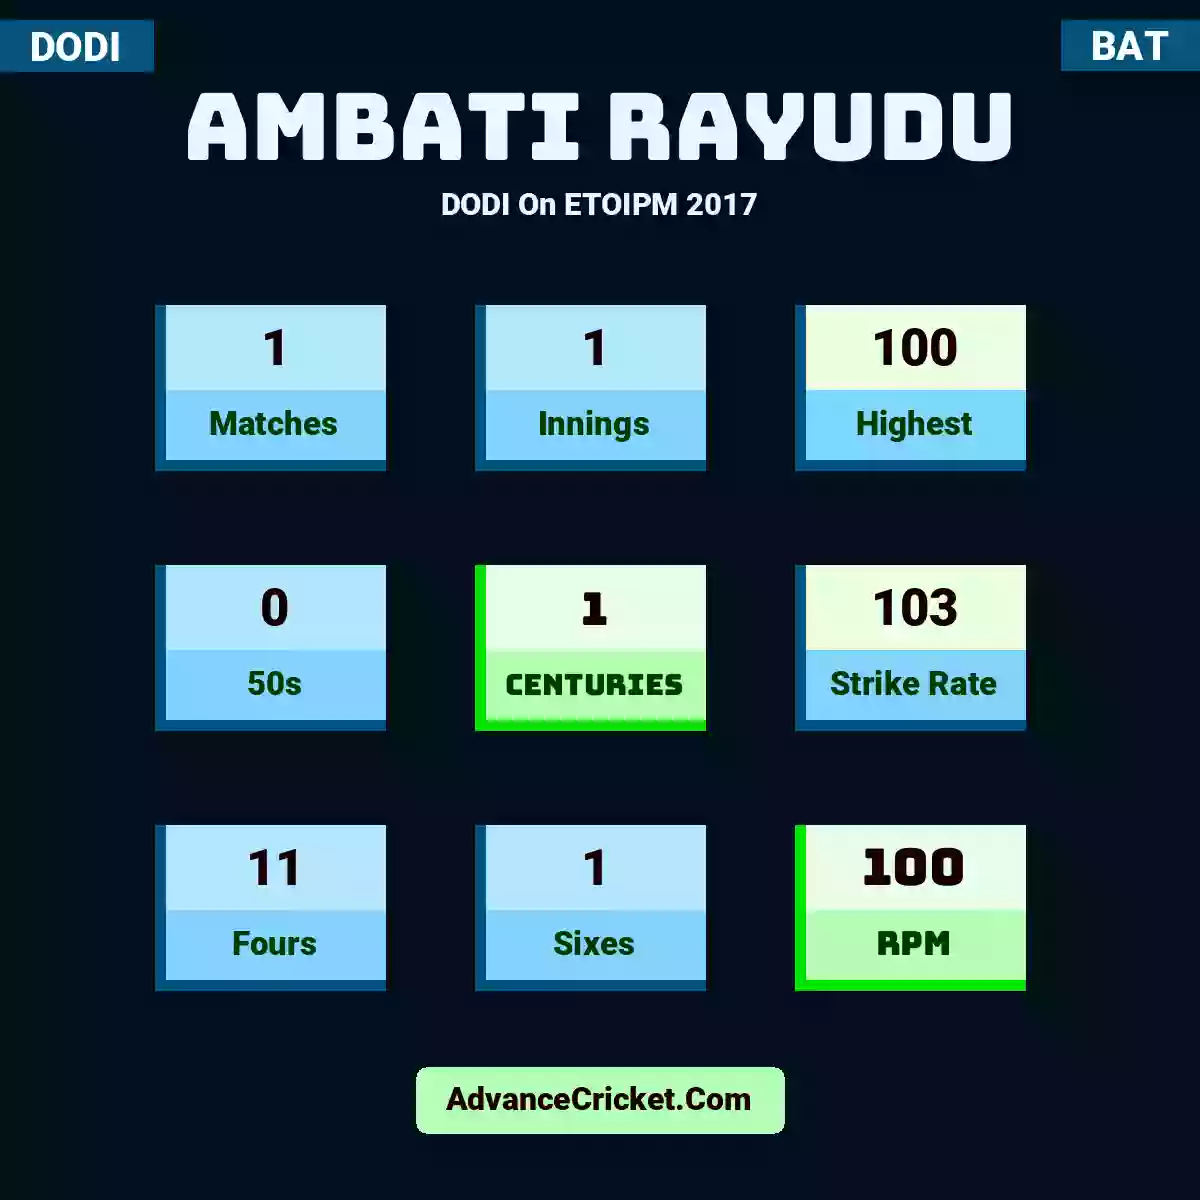 Ambati Rayudu DODI  On ETOIPM 2017, Ambati Rayudu played 1 matches, scored 100 runs as highest, 0 half-centuries, and 1 centuries, with a strike rate of 103. A.Rayudu hit 11 fours and 1 sixes, with an RPM of 100.